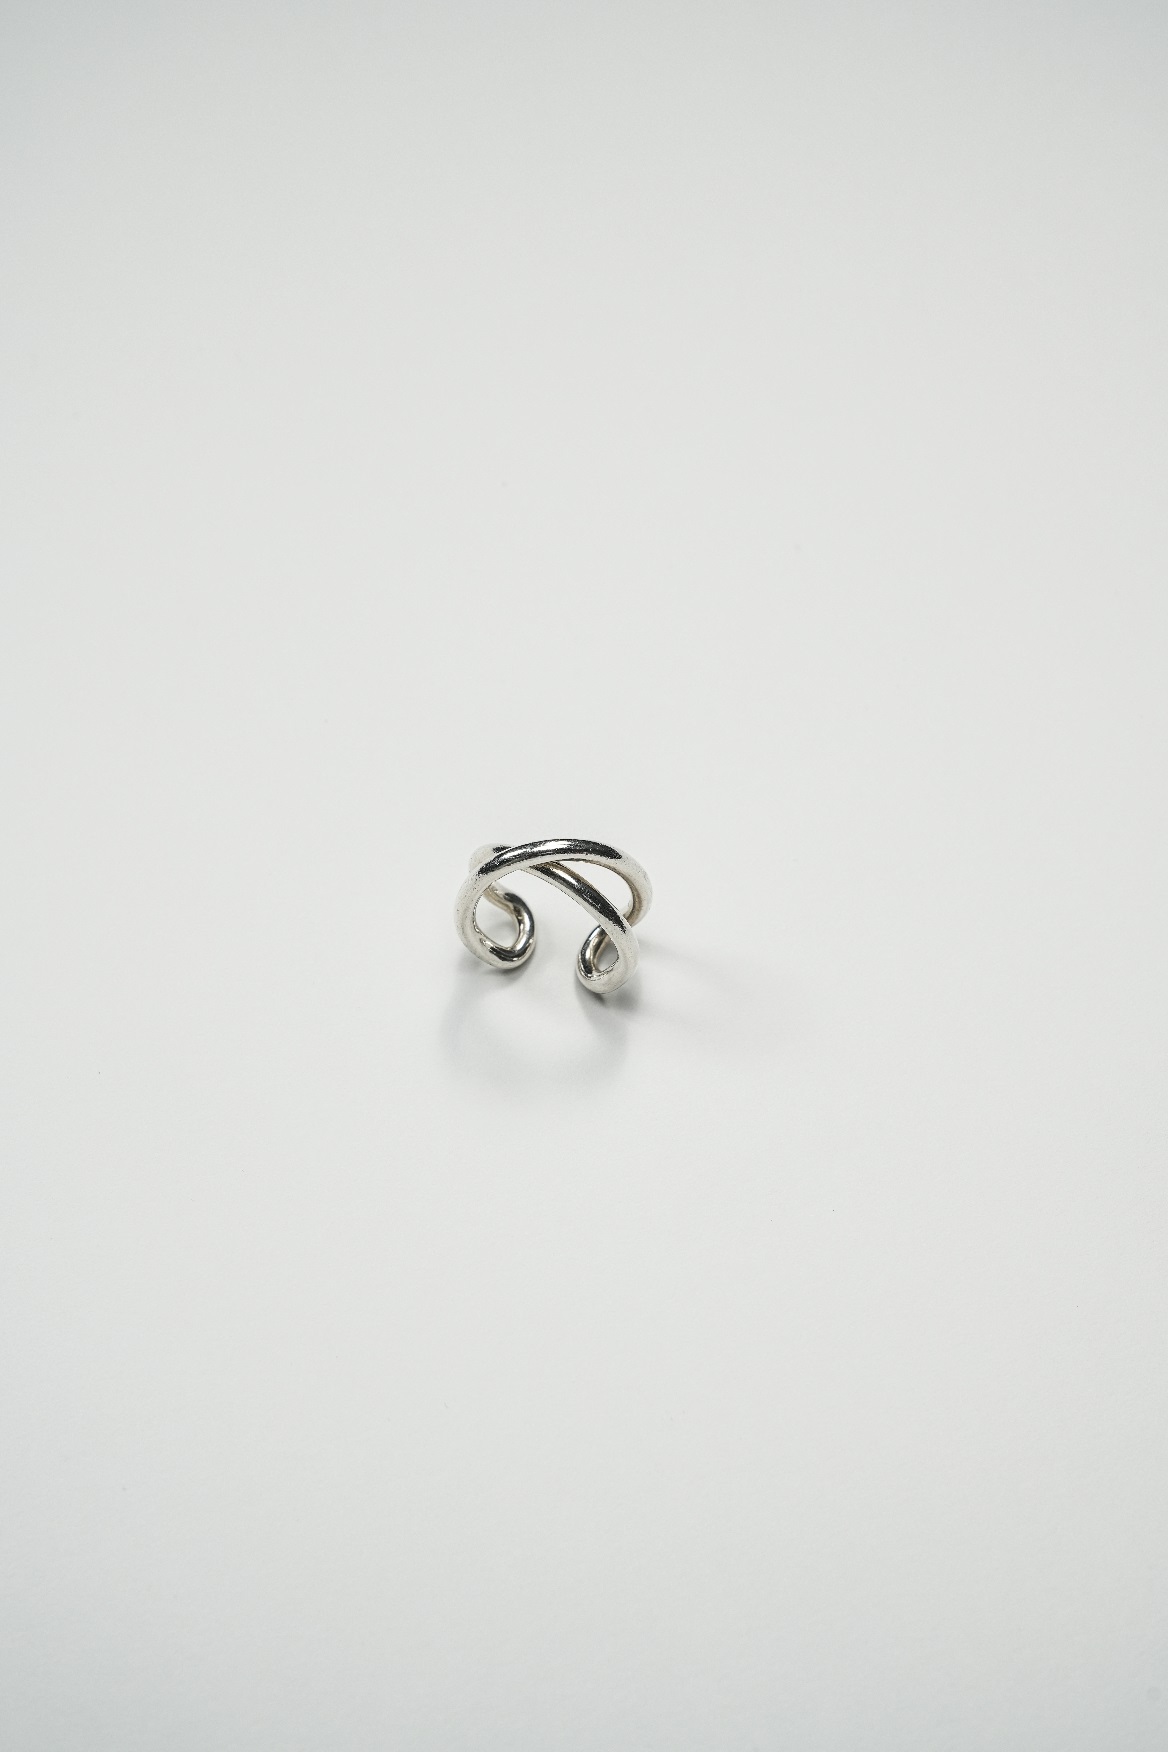 24K white gold vermeil ring/earcuff in 925 silver-0